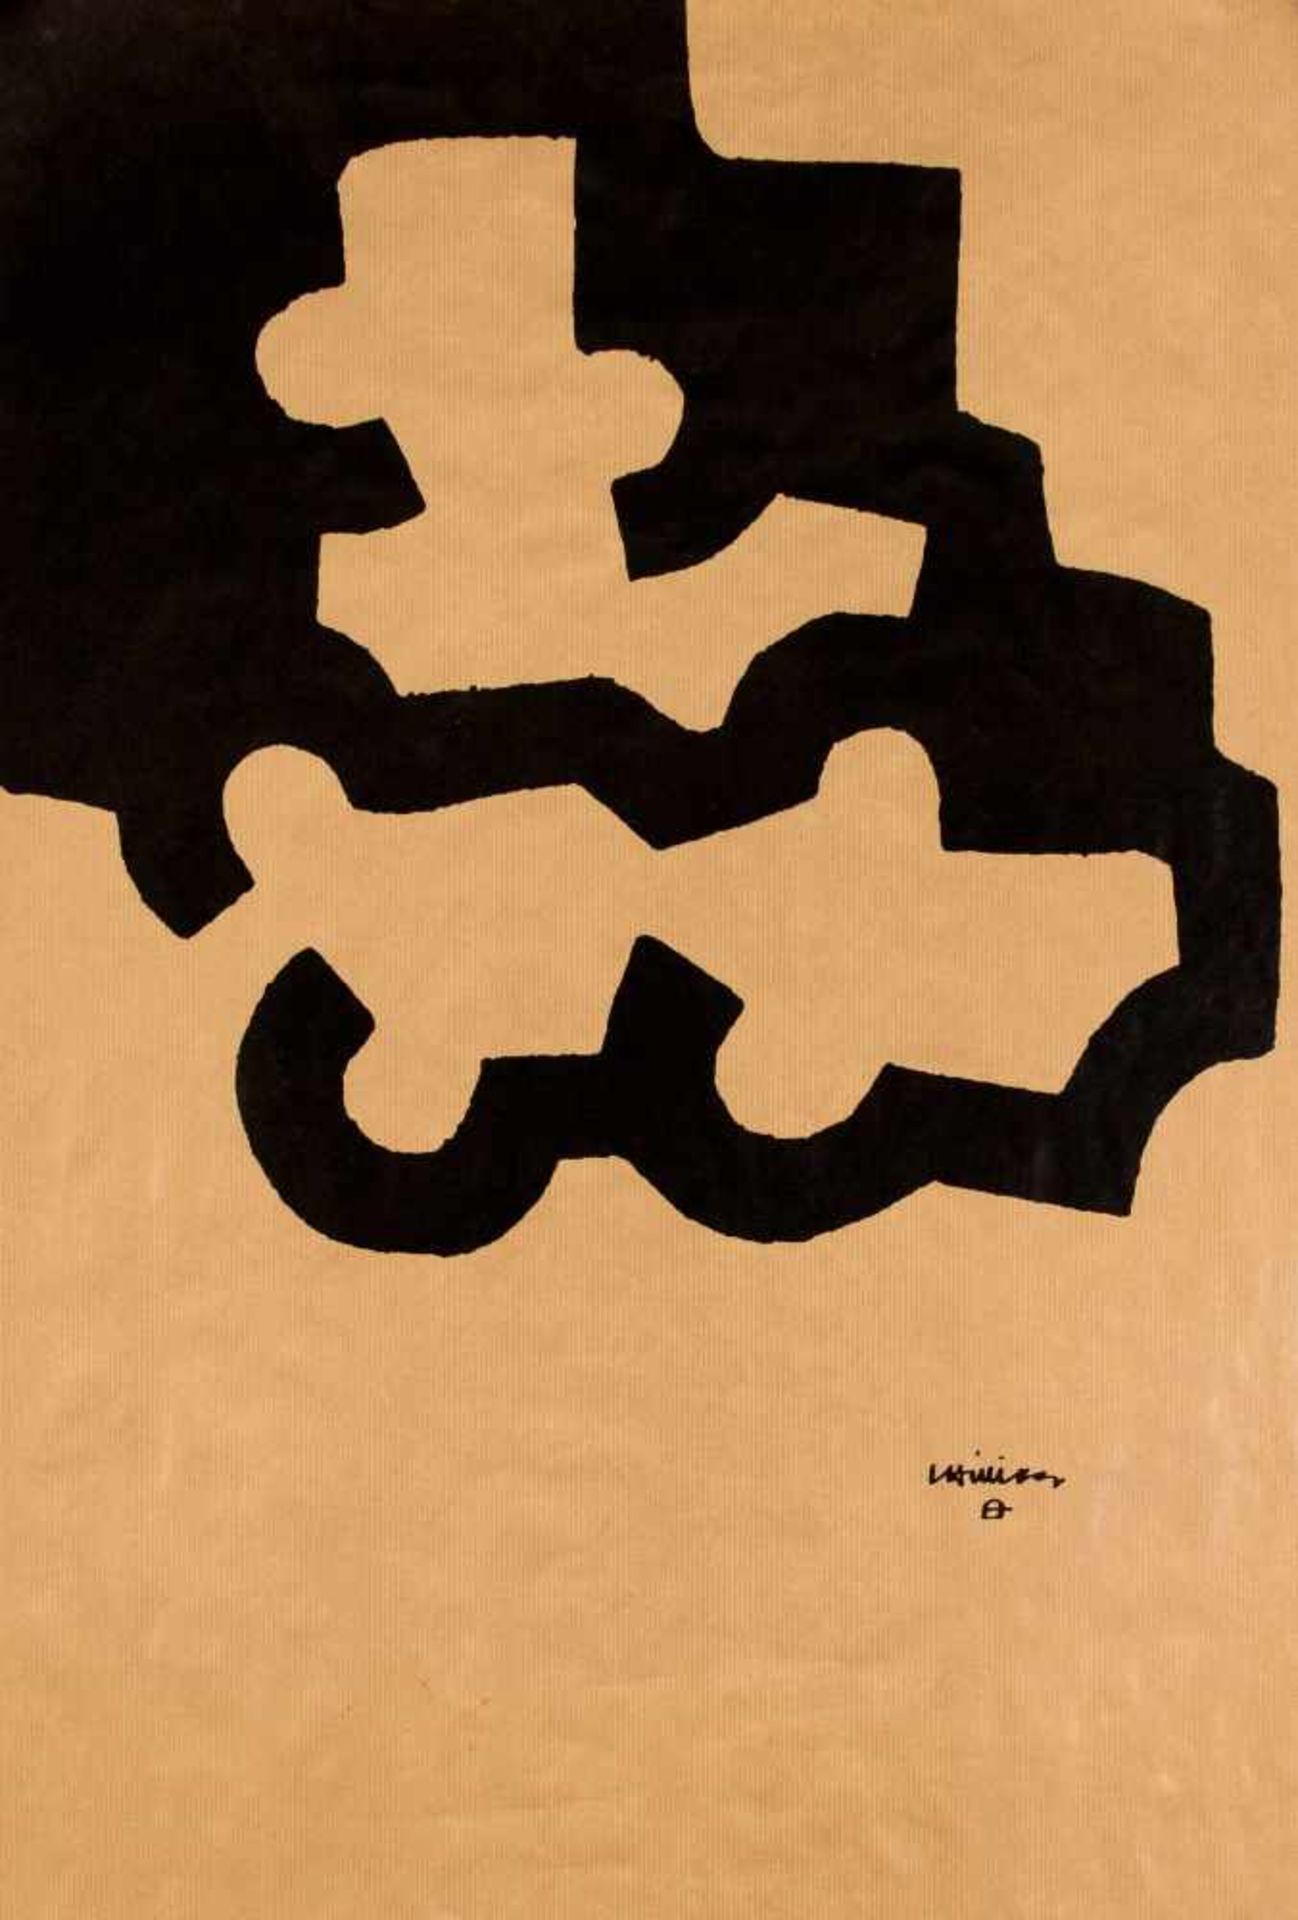 Eduardo Chillida (1924-2002), composition o.T., silkscreen in black on light brown kraft